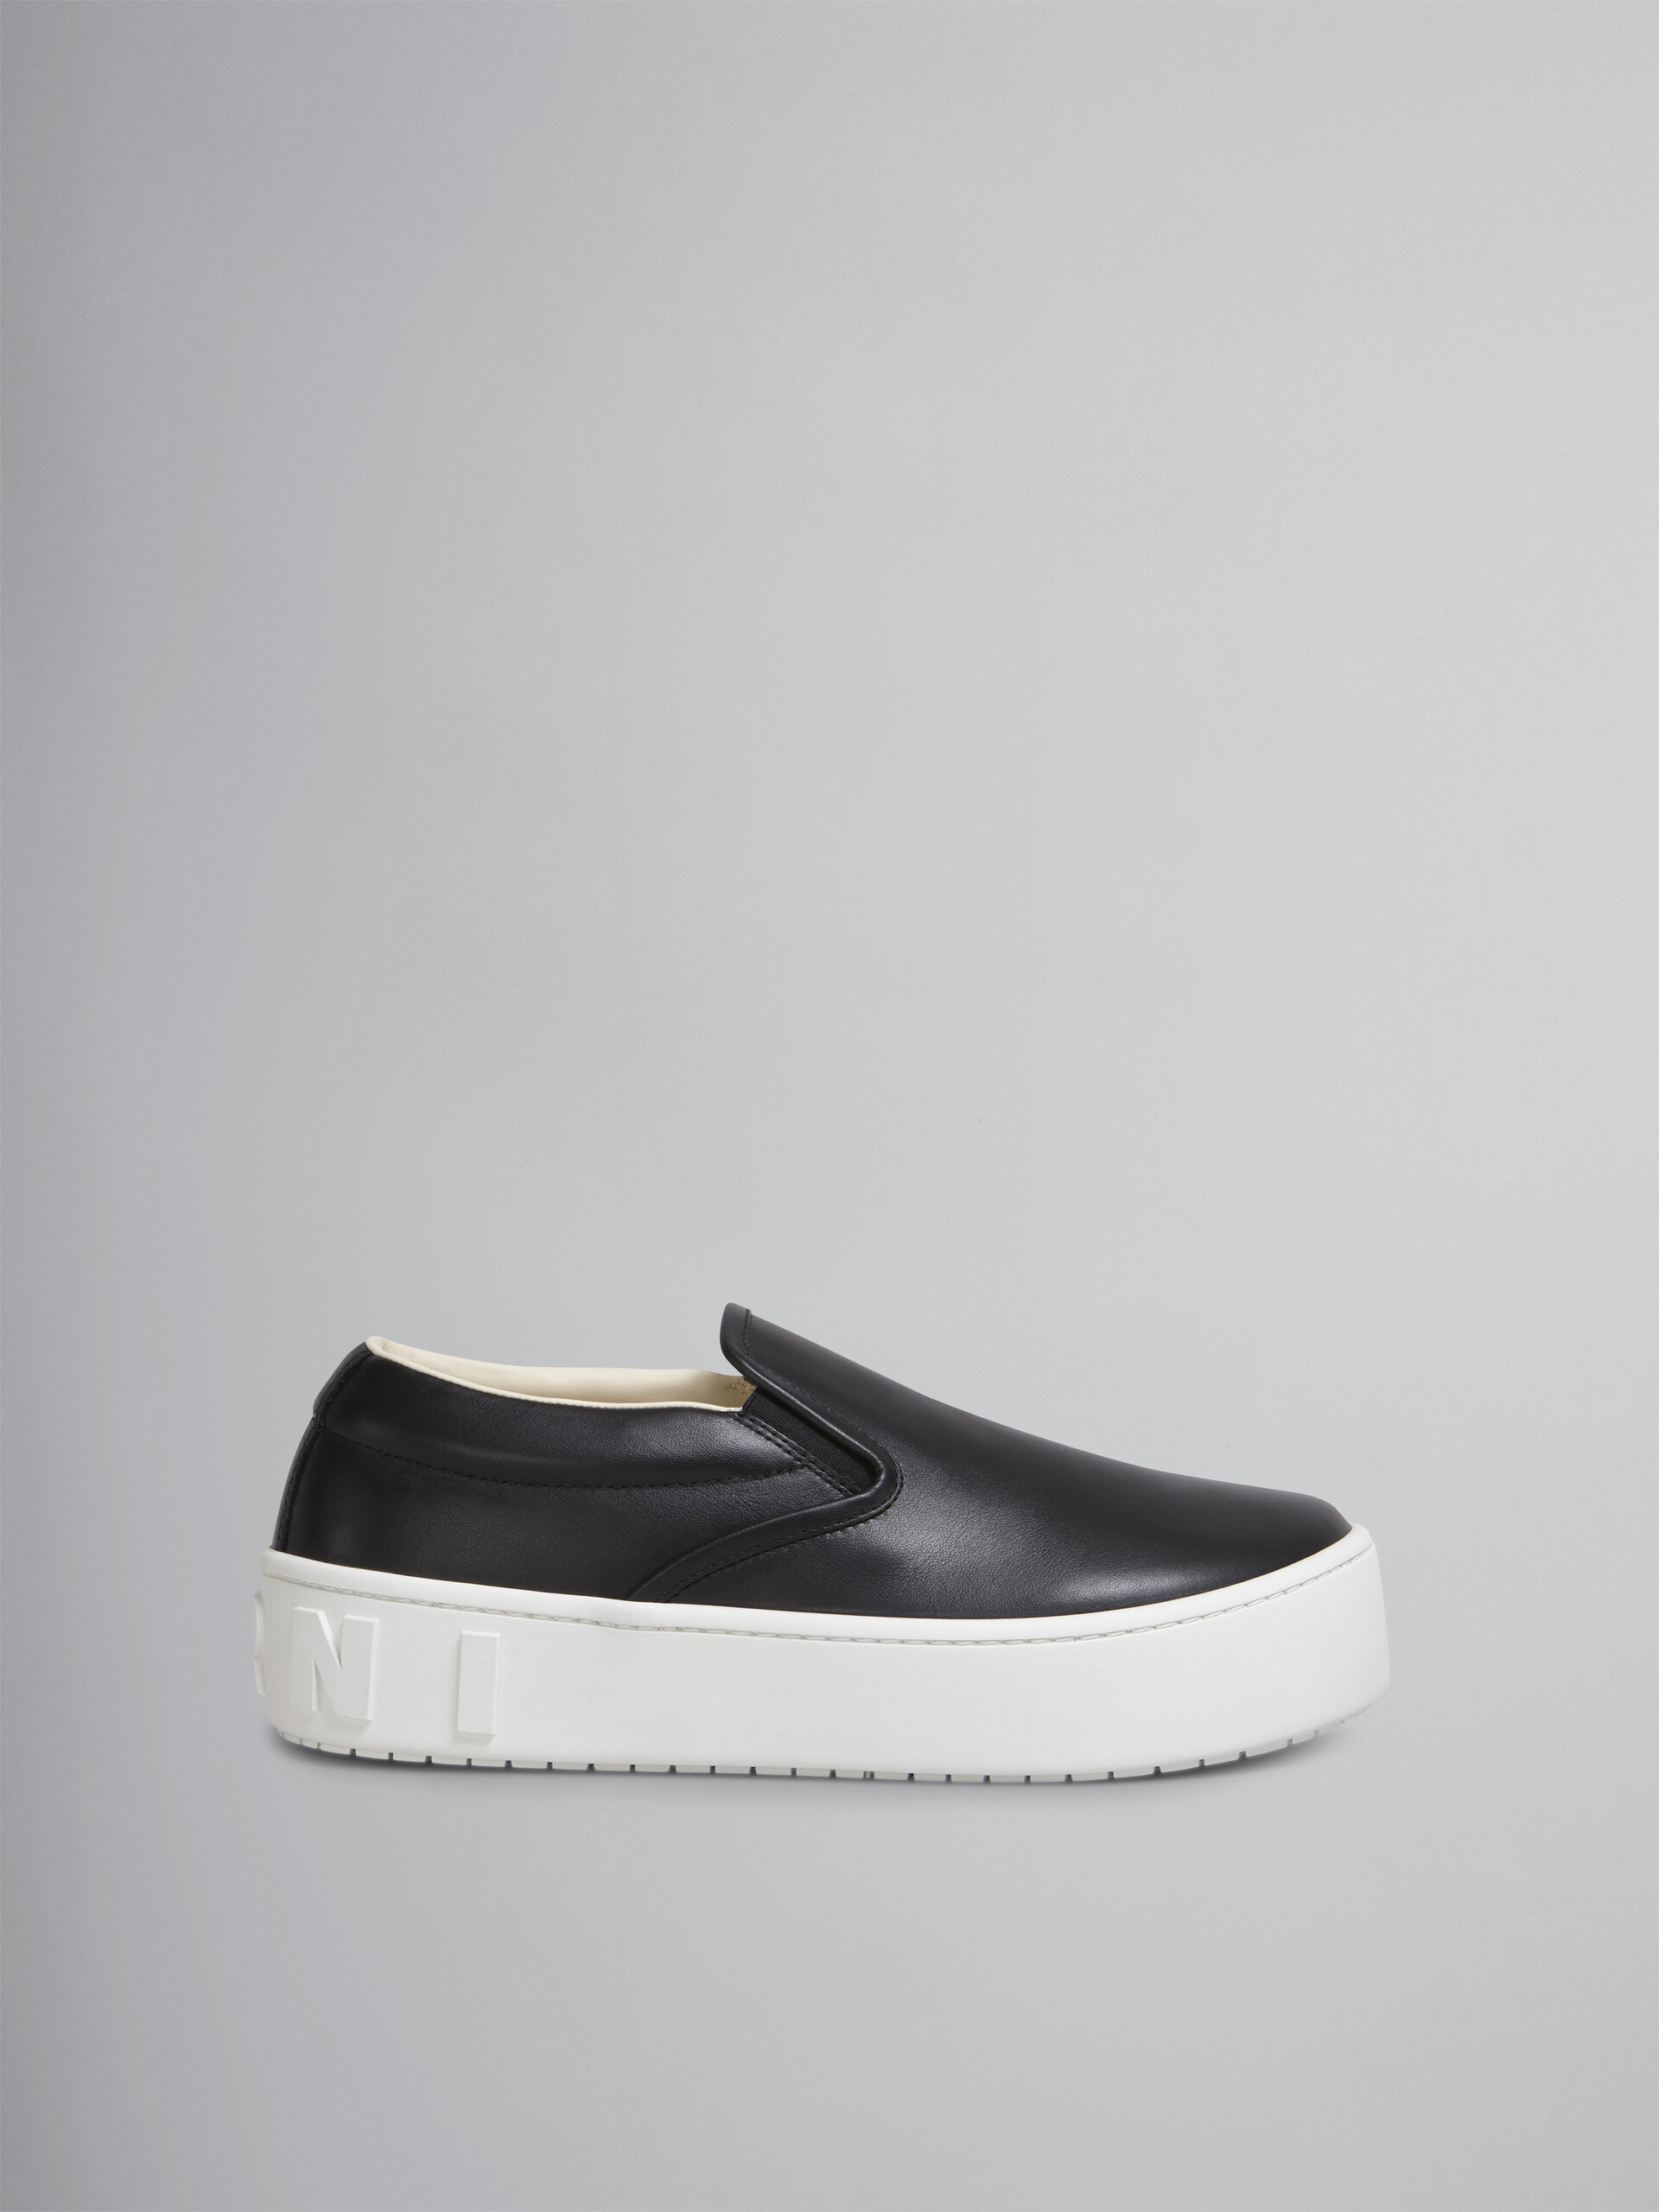 Black calfskin slip-on sneaker with raised maxi Marni logo - Sneakers - Image 1